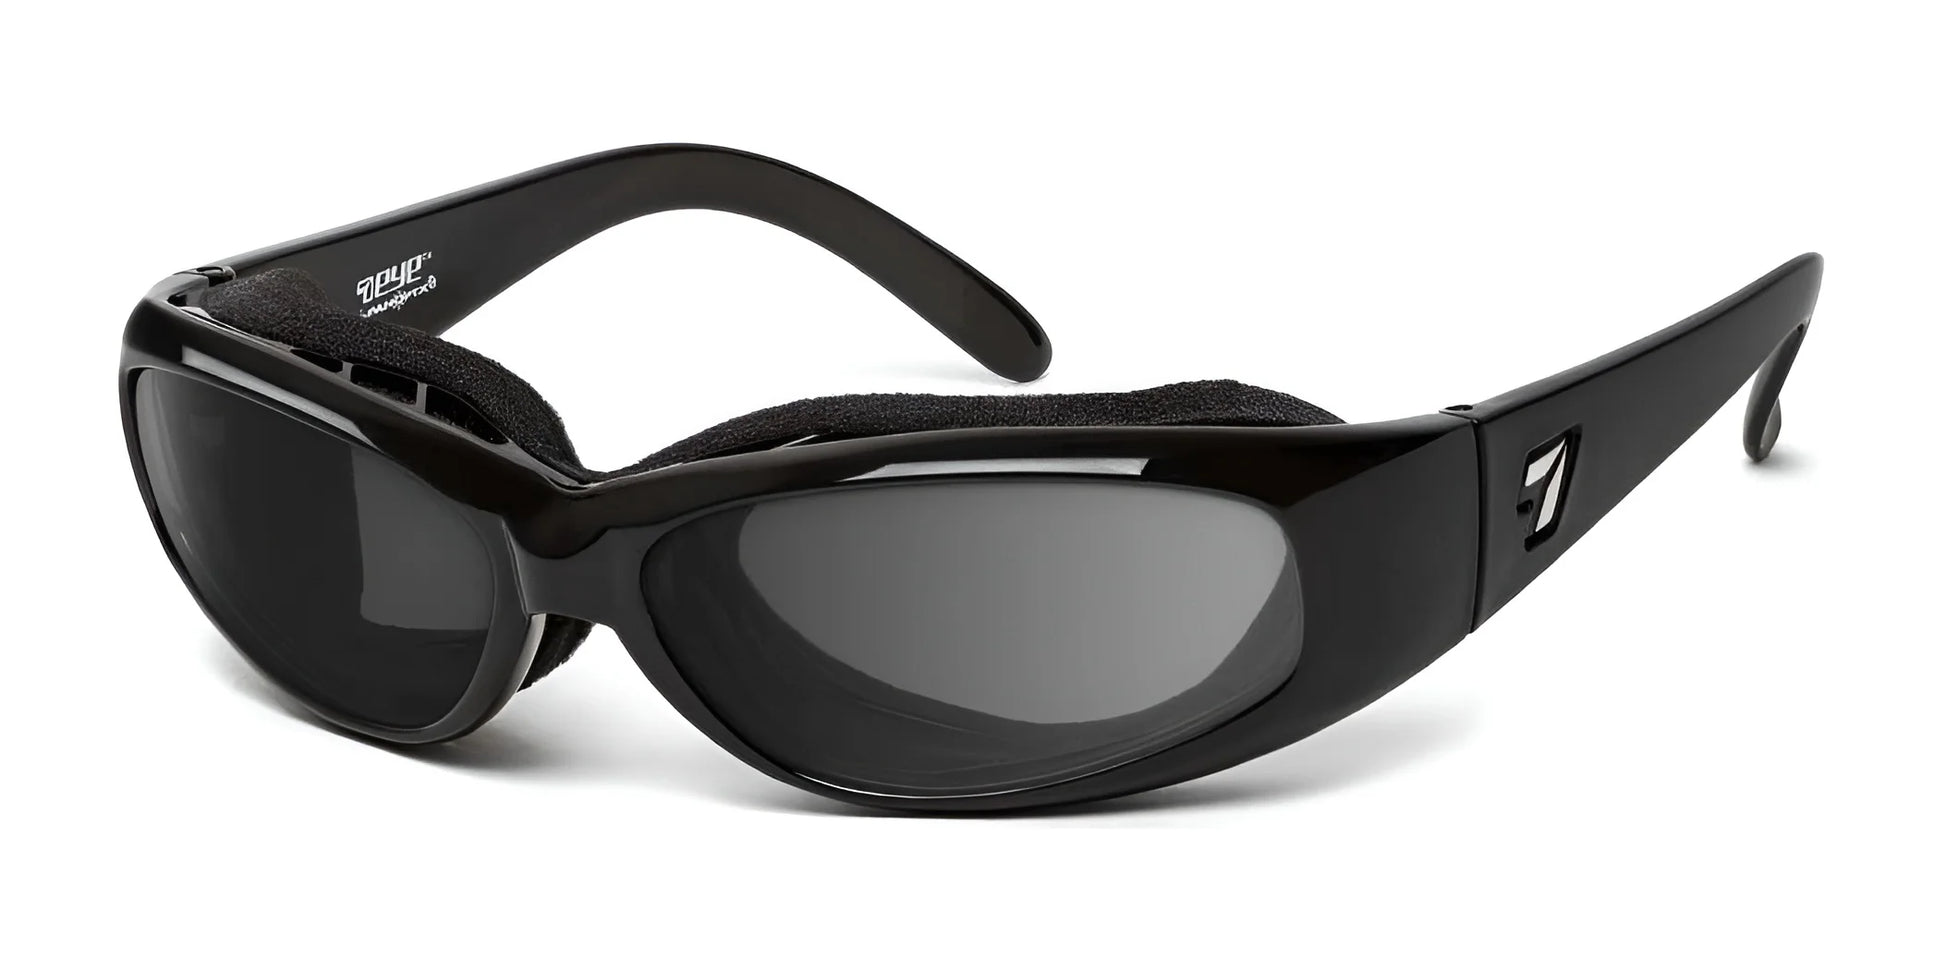 7eye Chubasco Sunglasses Glossy Black / Gray